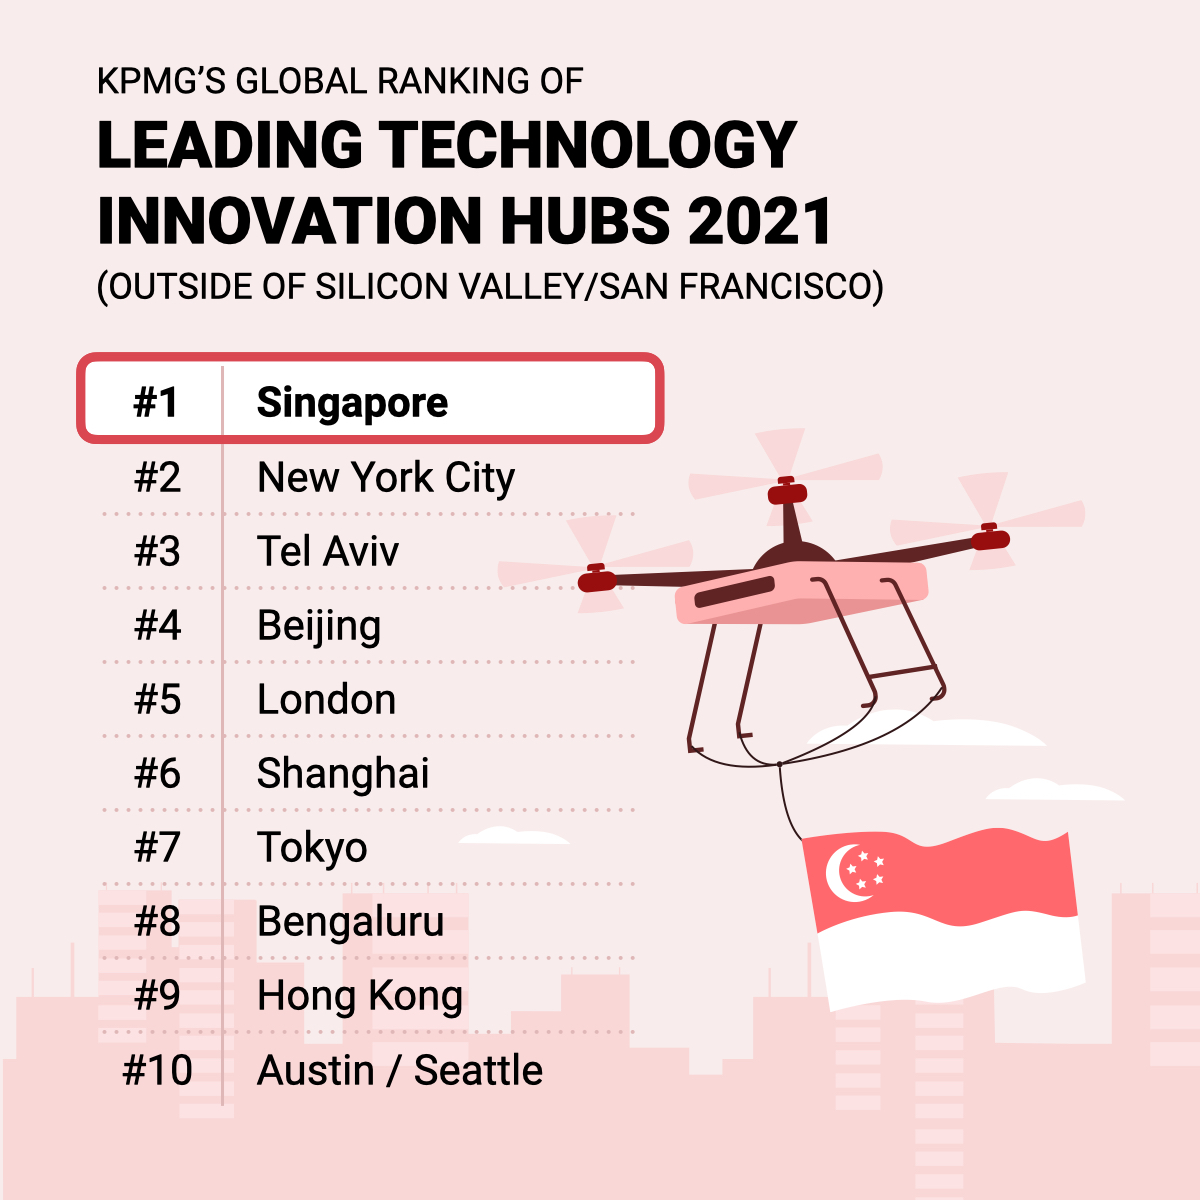 KPMG's Global Ranking of Leading Technology Hubs